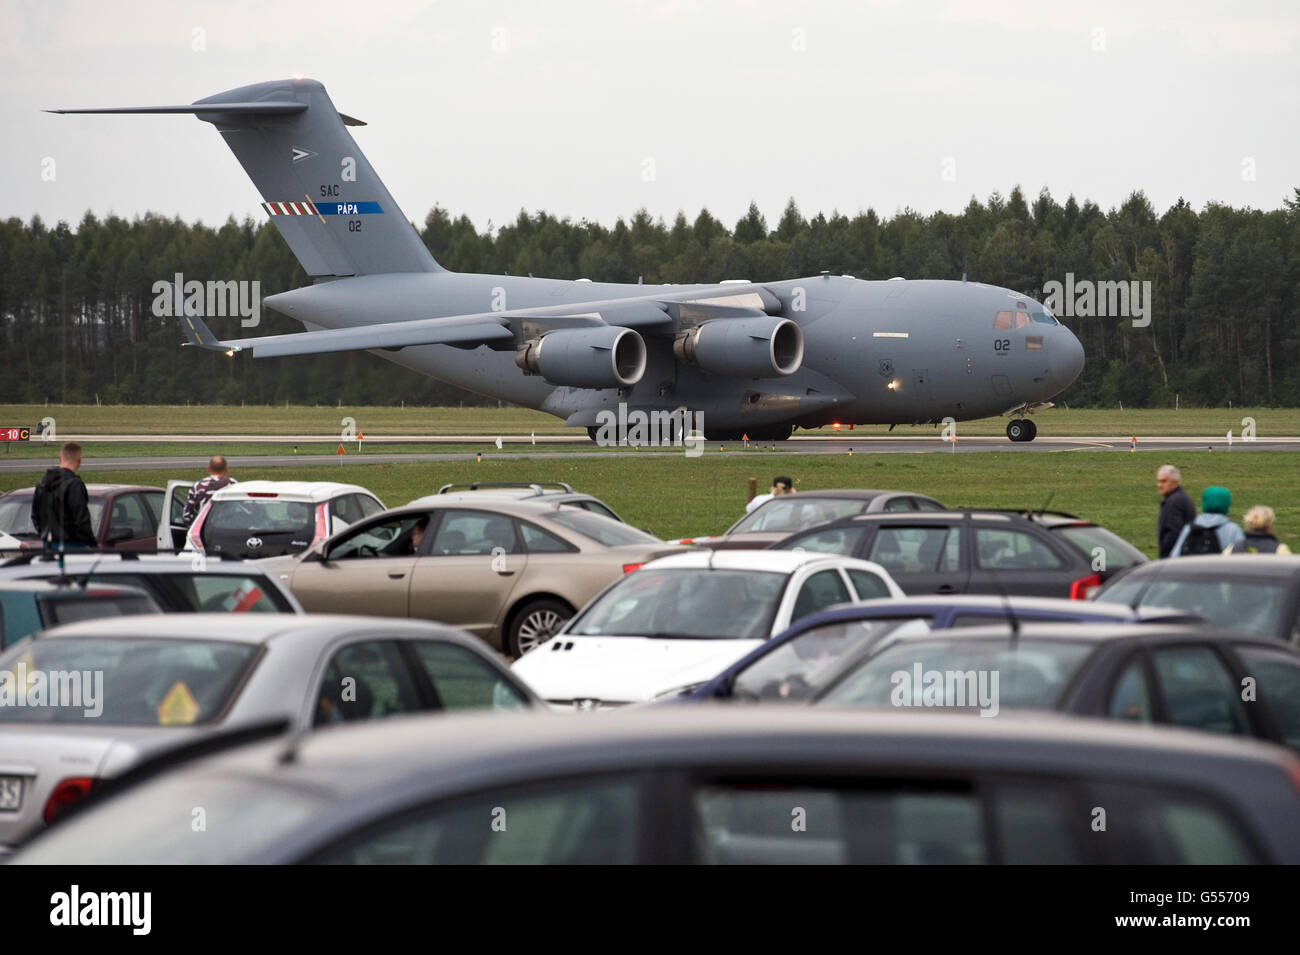 Lask, Poland. 26th September, 2015. C-17 Globemaster of US Air Force lands at Łask military airport. ©Marcin Rozpedowski/Alamy Stock Photo Stock Photo